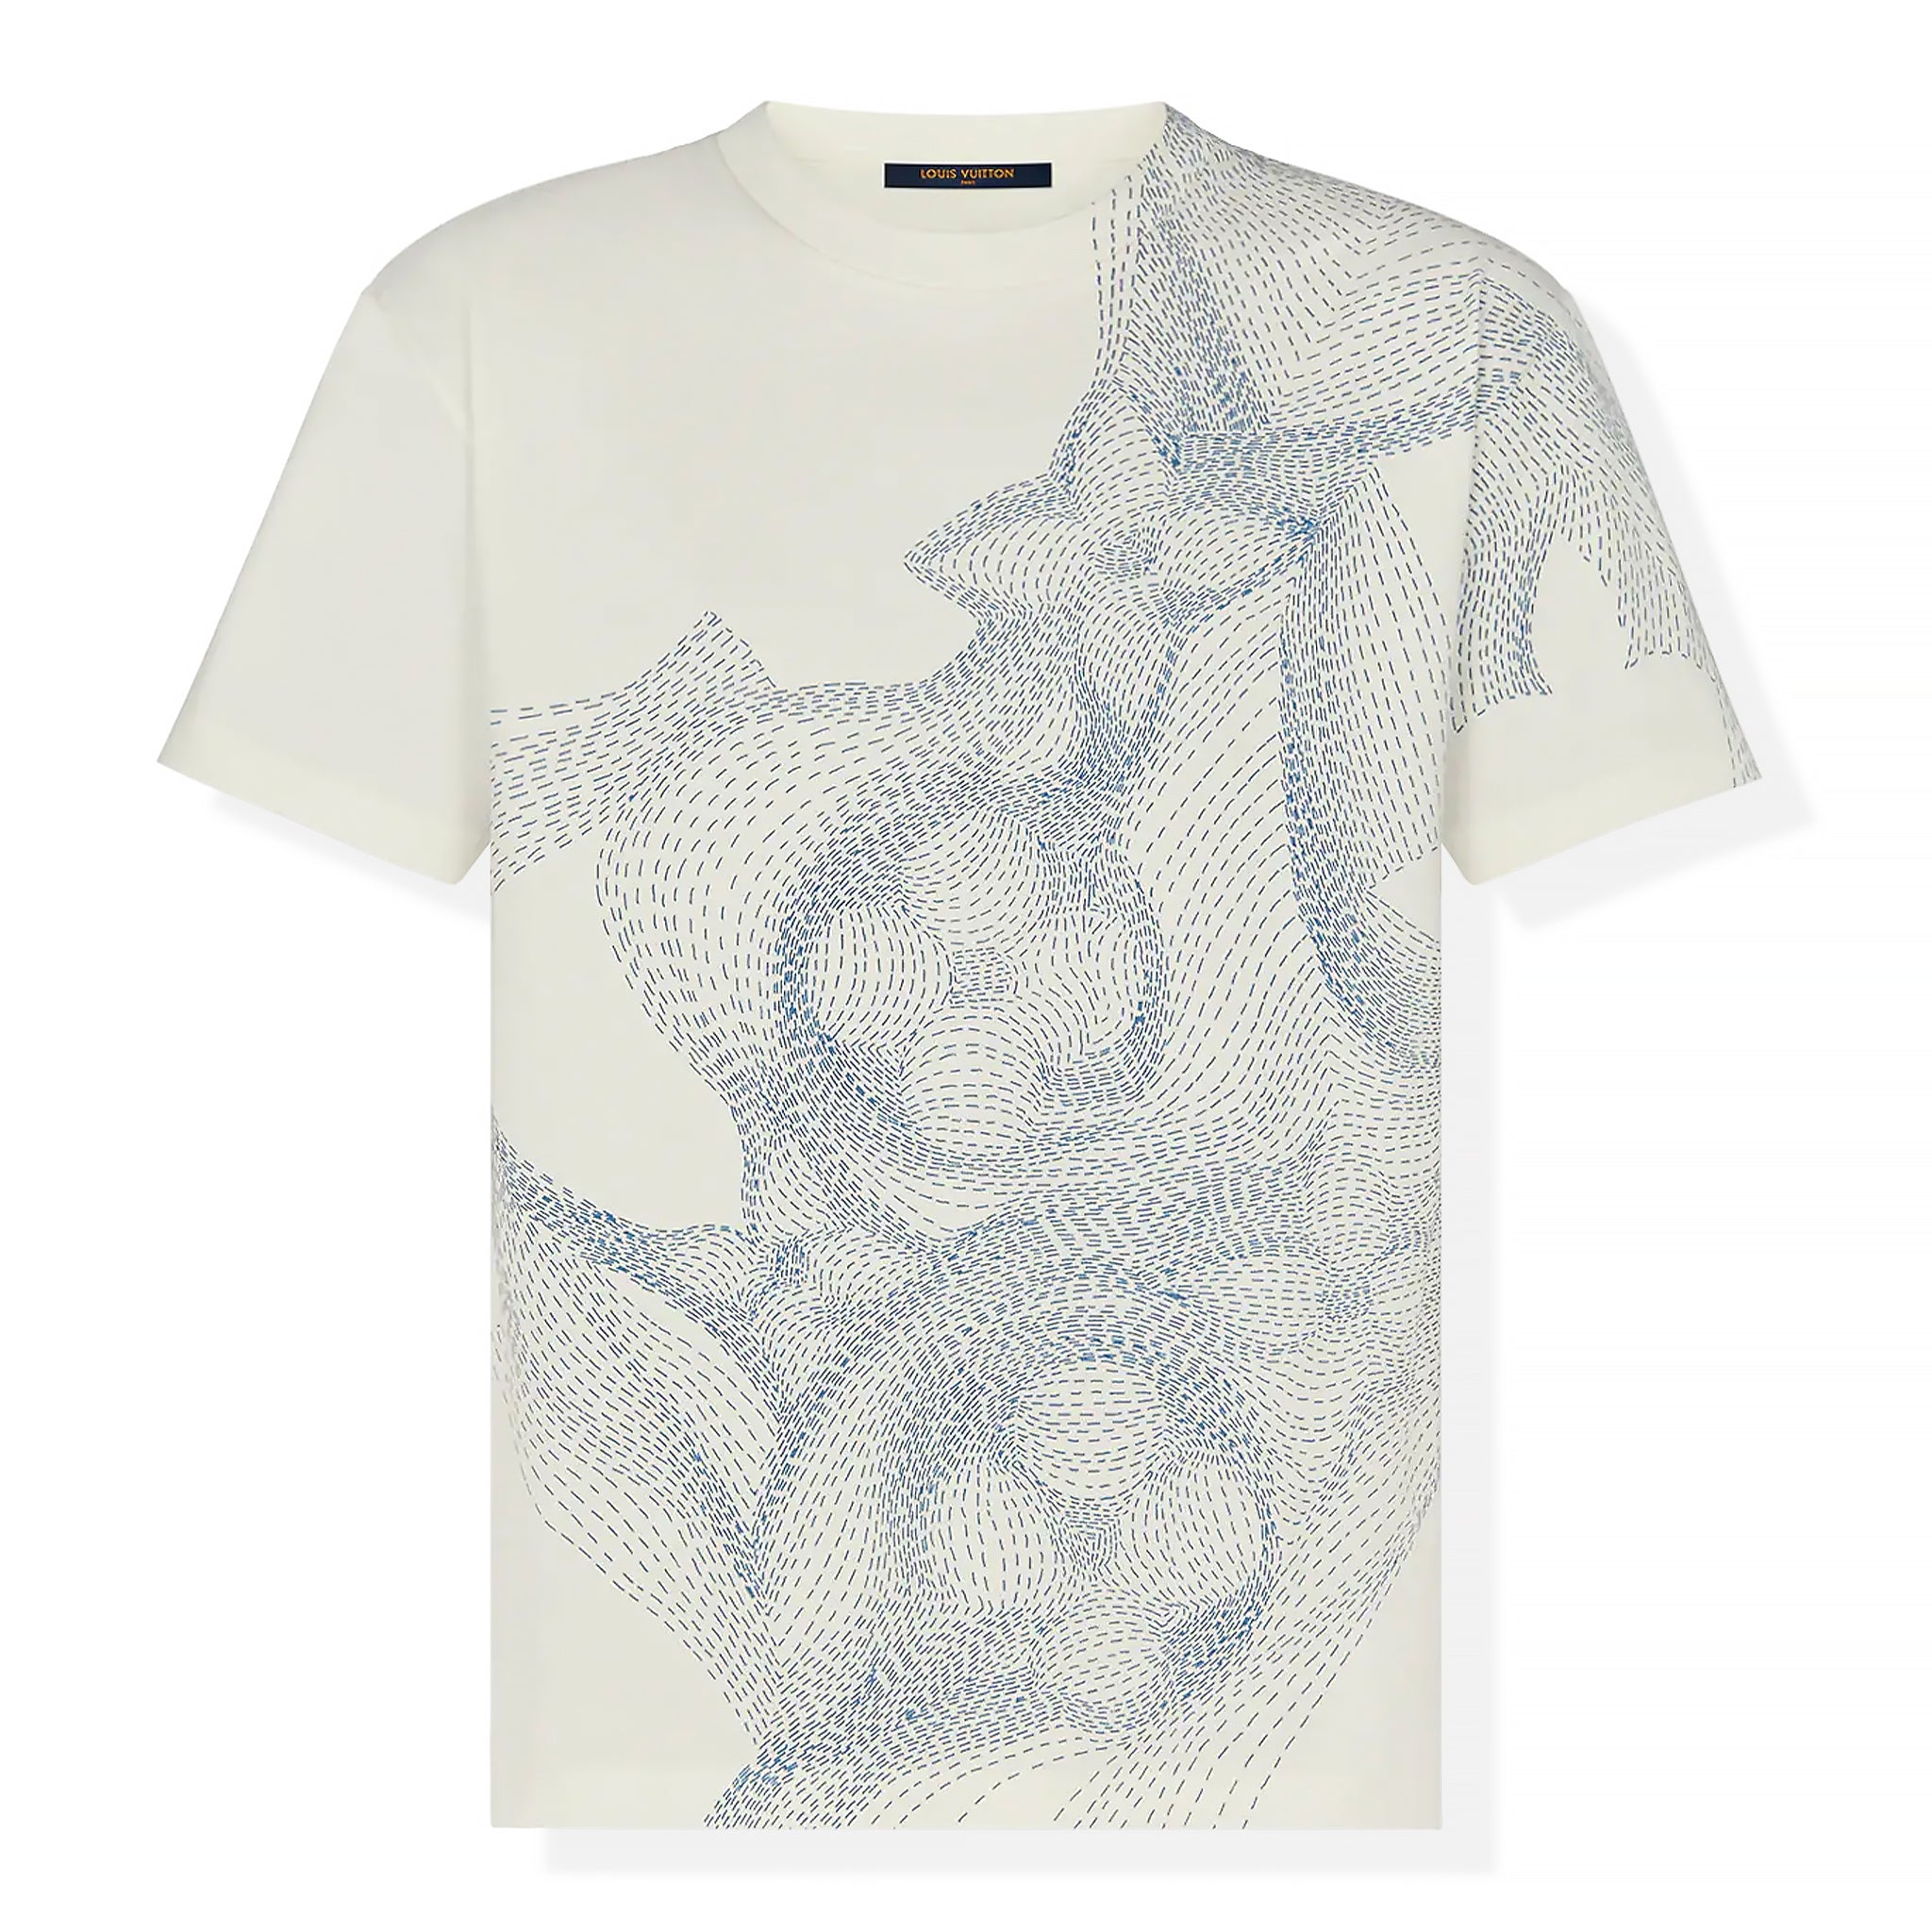 Louis Vuitton signature 3d pocket monogram t shirt for Sale in Miami